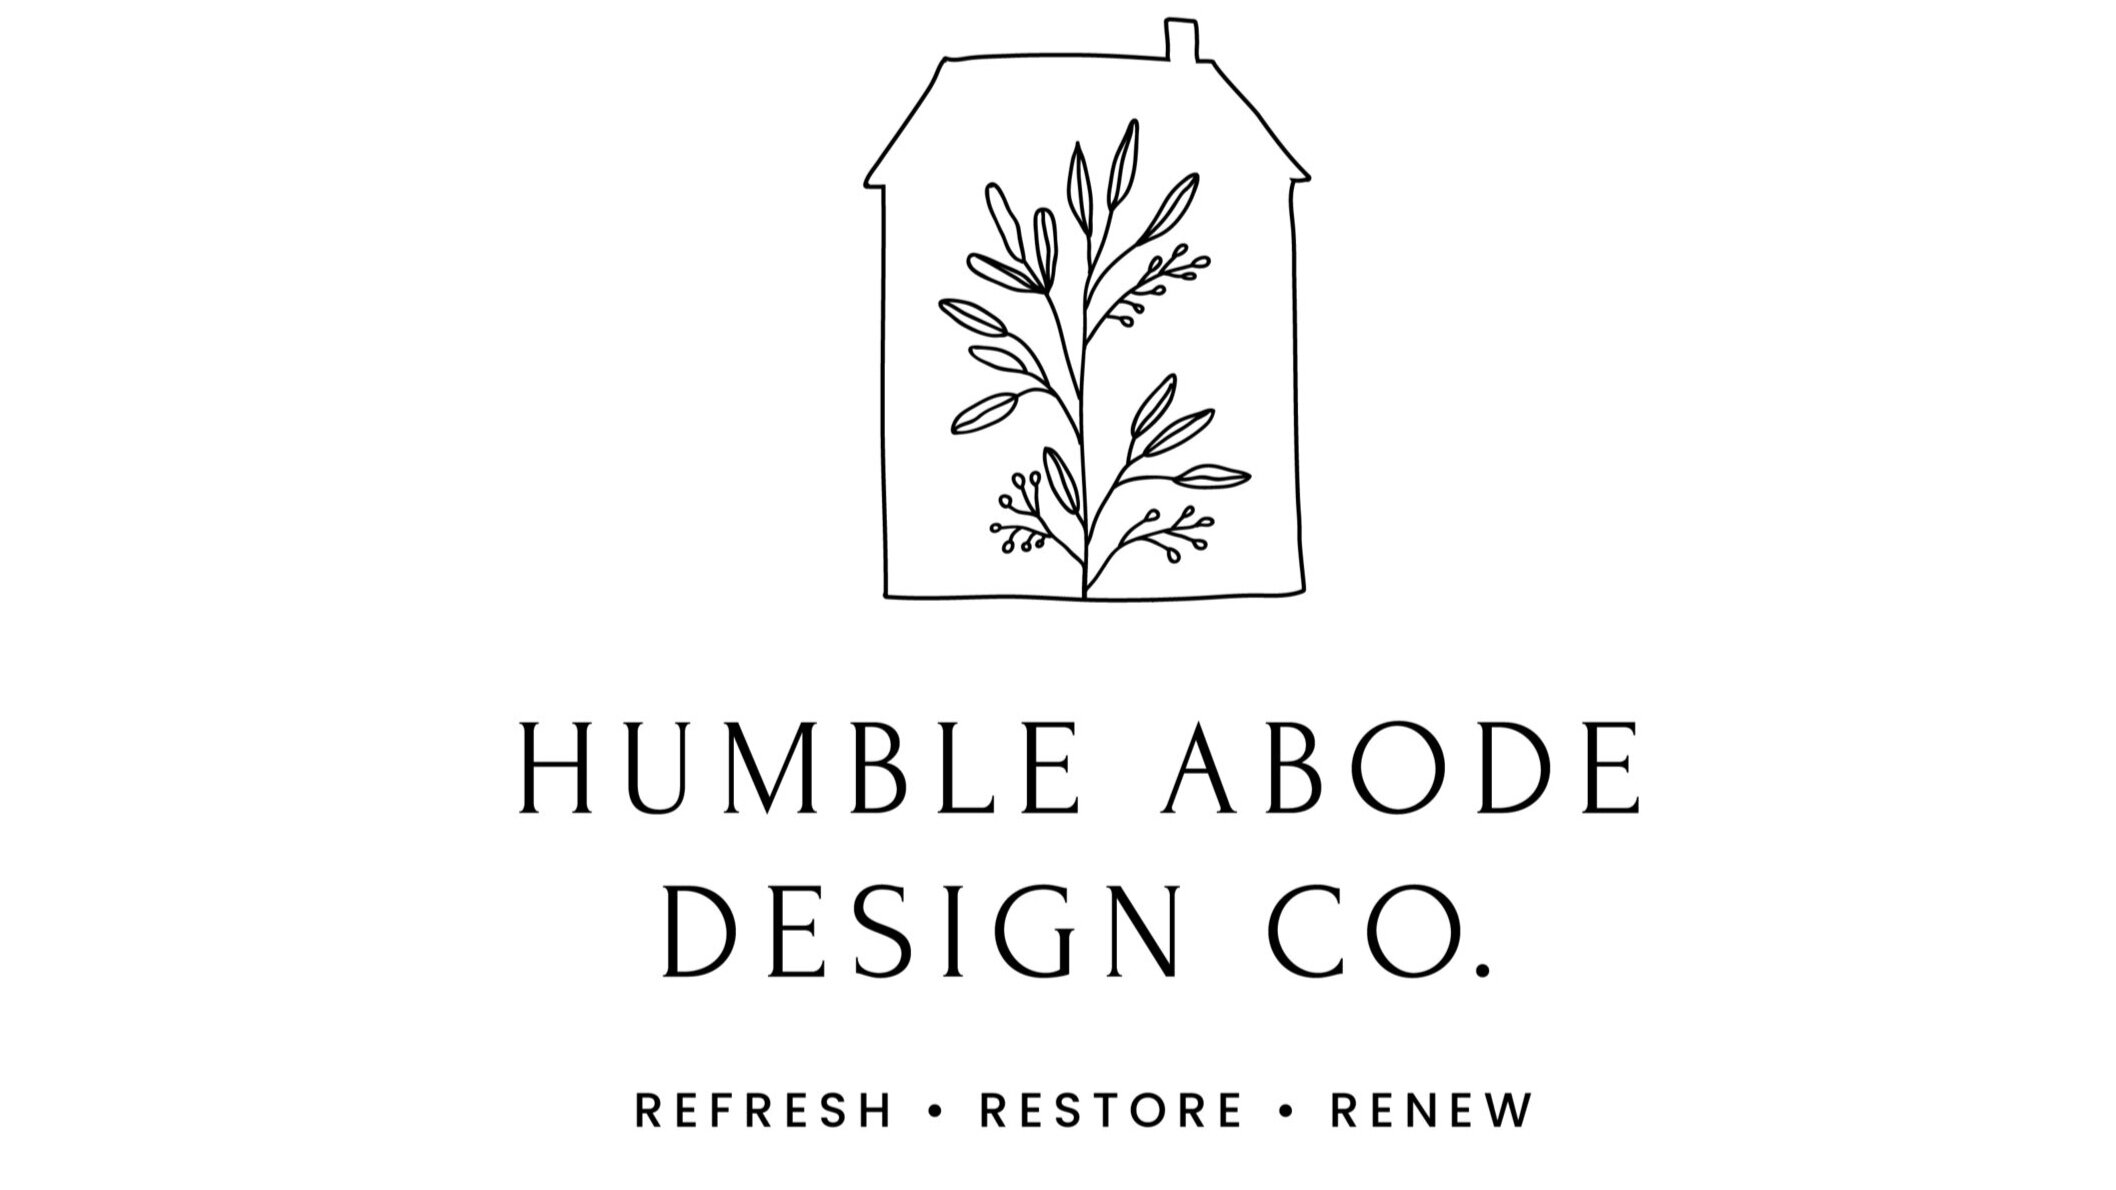 Humble Abode Design Co. 